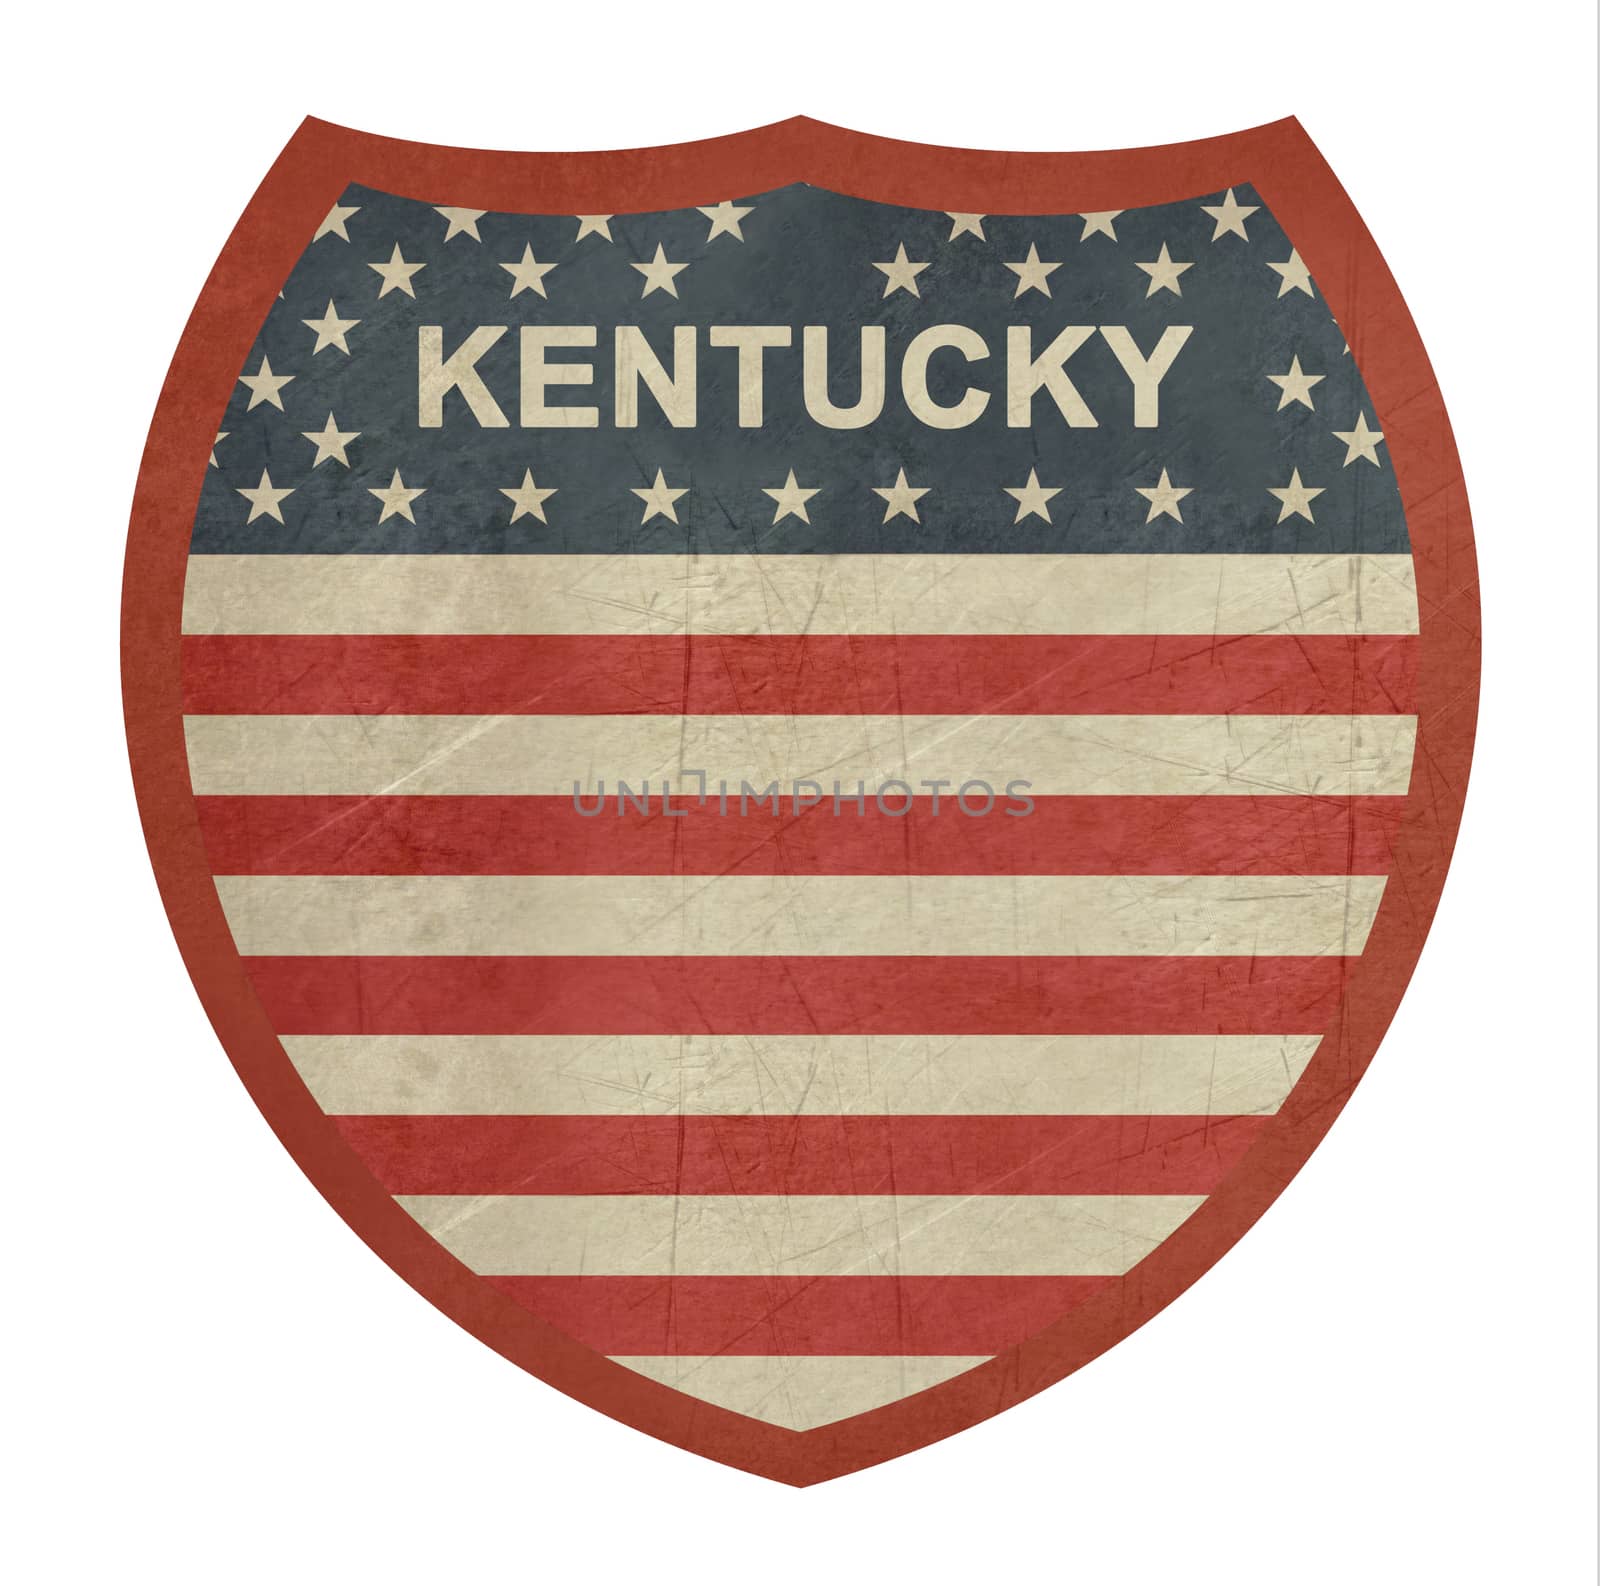 Grunge Kentucky American interstate highway sign by speedfighter